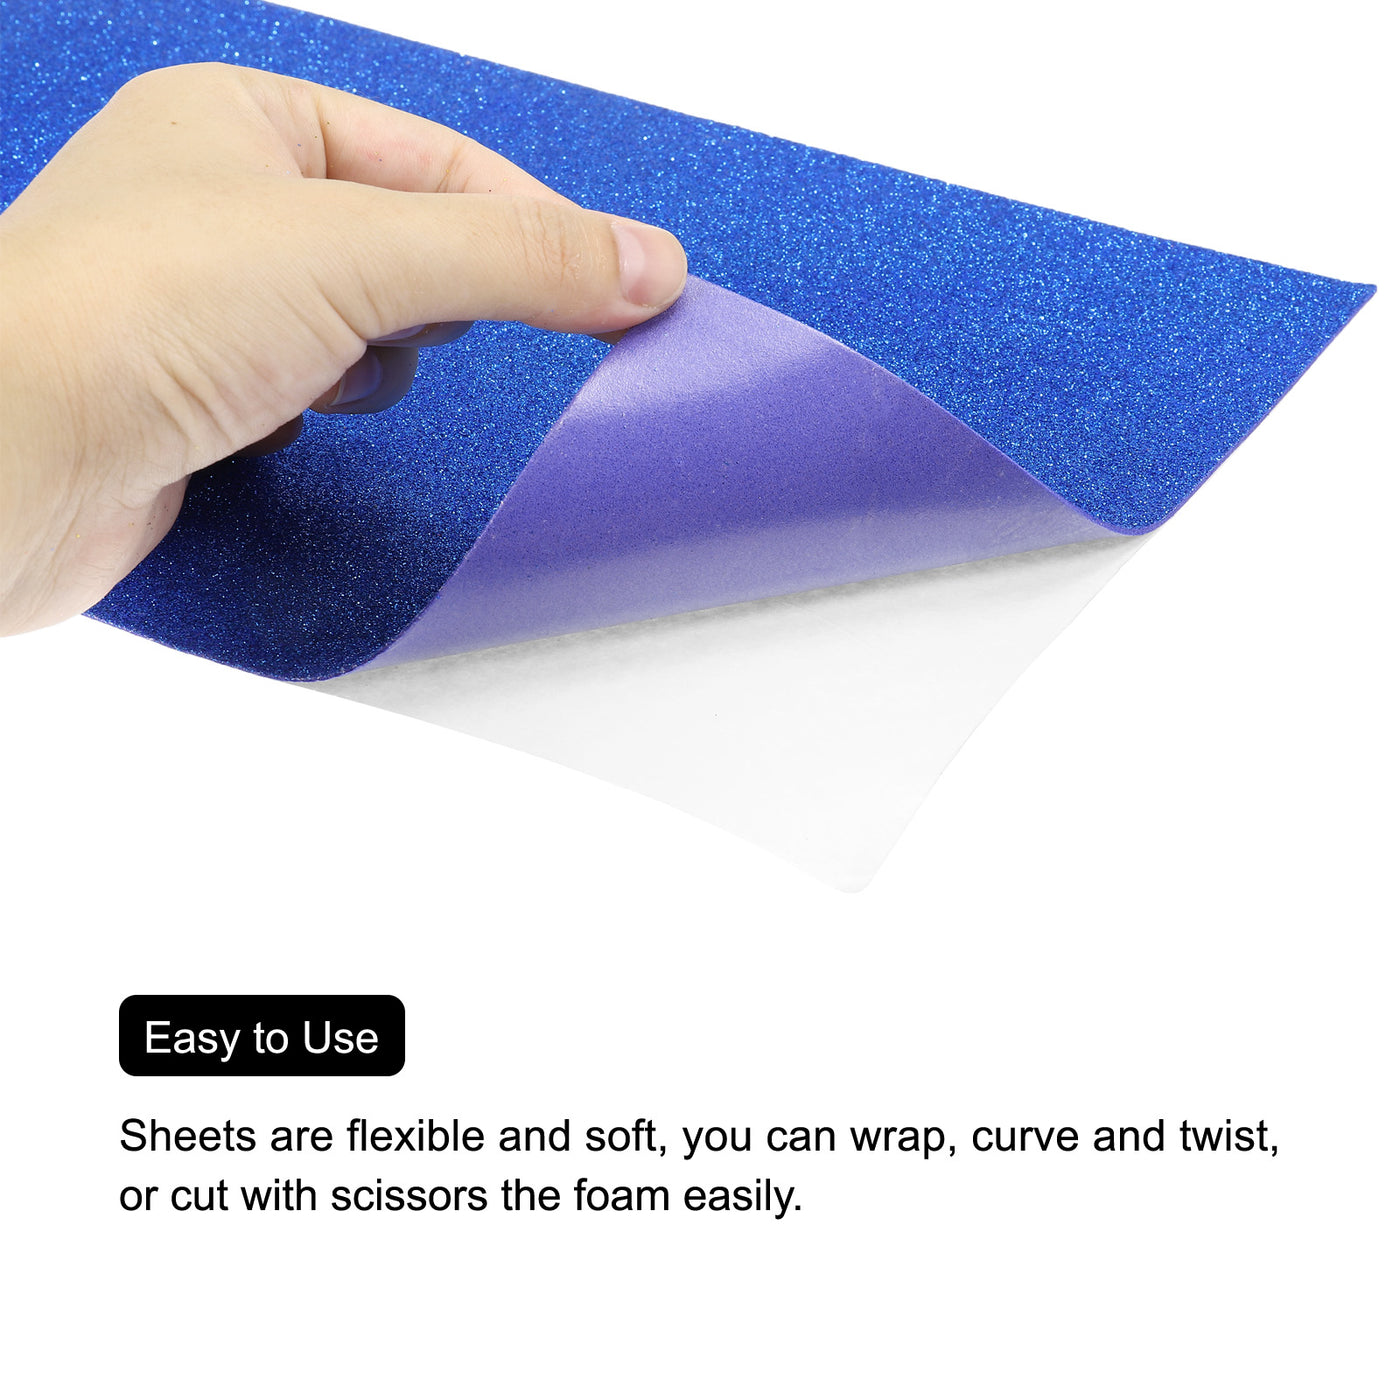 Harfington Glitter EVA Foam Sheets Dark Blue Self-Adhesive Back 11.8x7.8 Inch 2mm Pack of 2